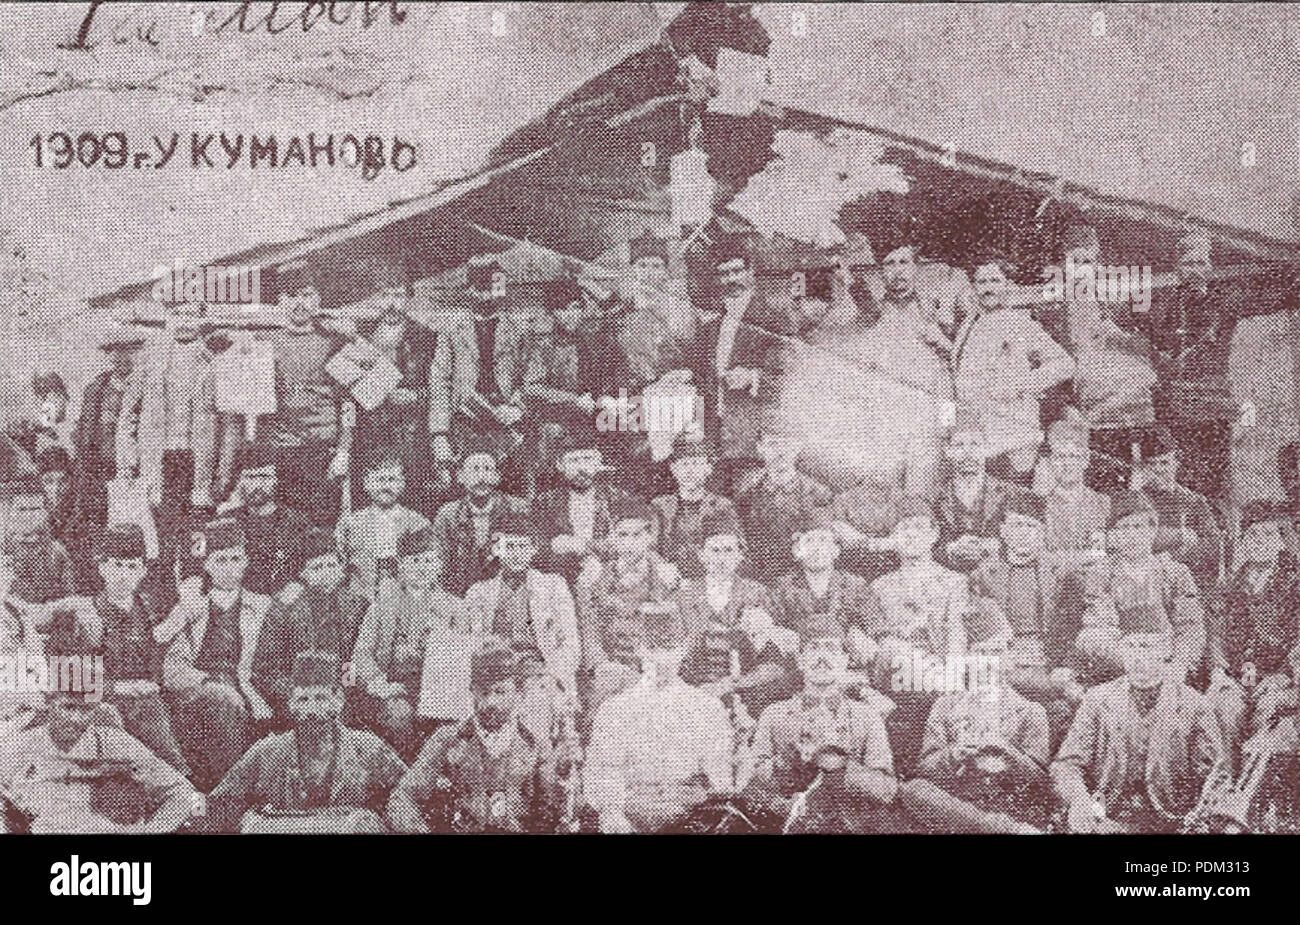 187 Kumanovo 1 of May 1909 Stock Photo